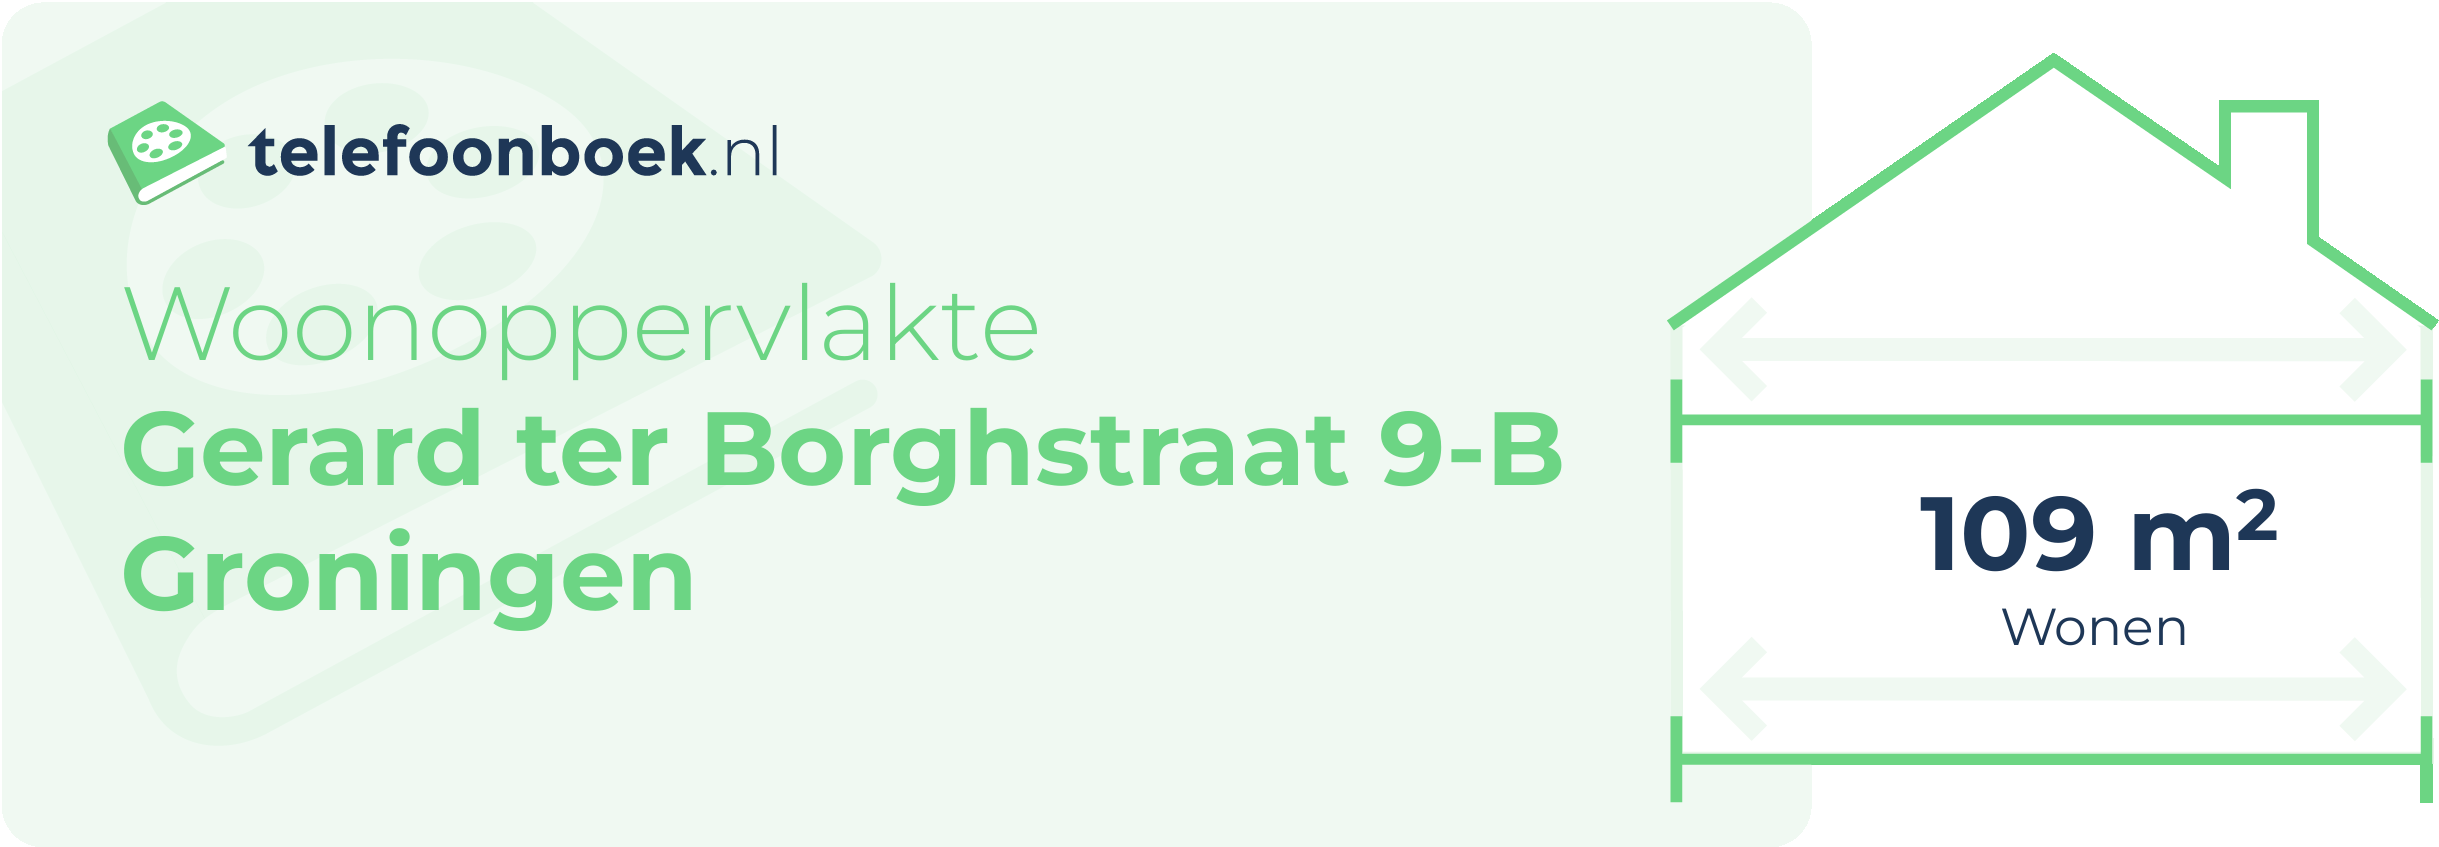 Woonoppervlakte Gerard Ter Borghstraat 9-B Groningen